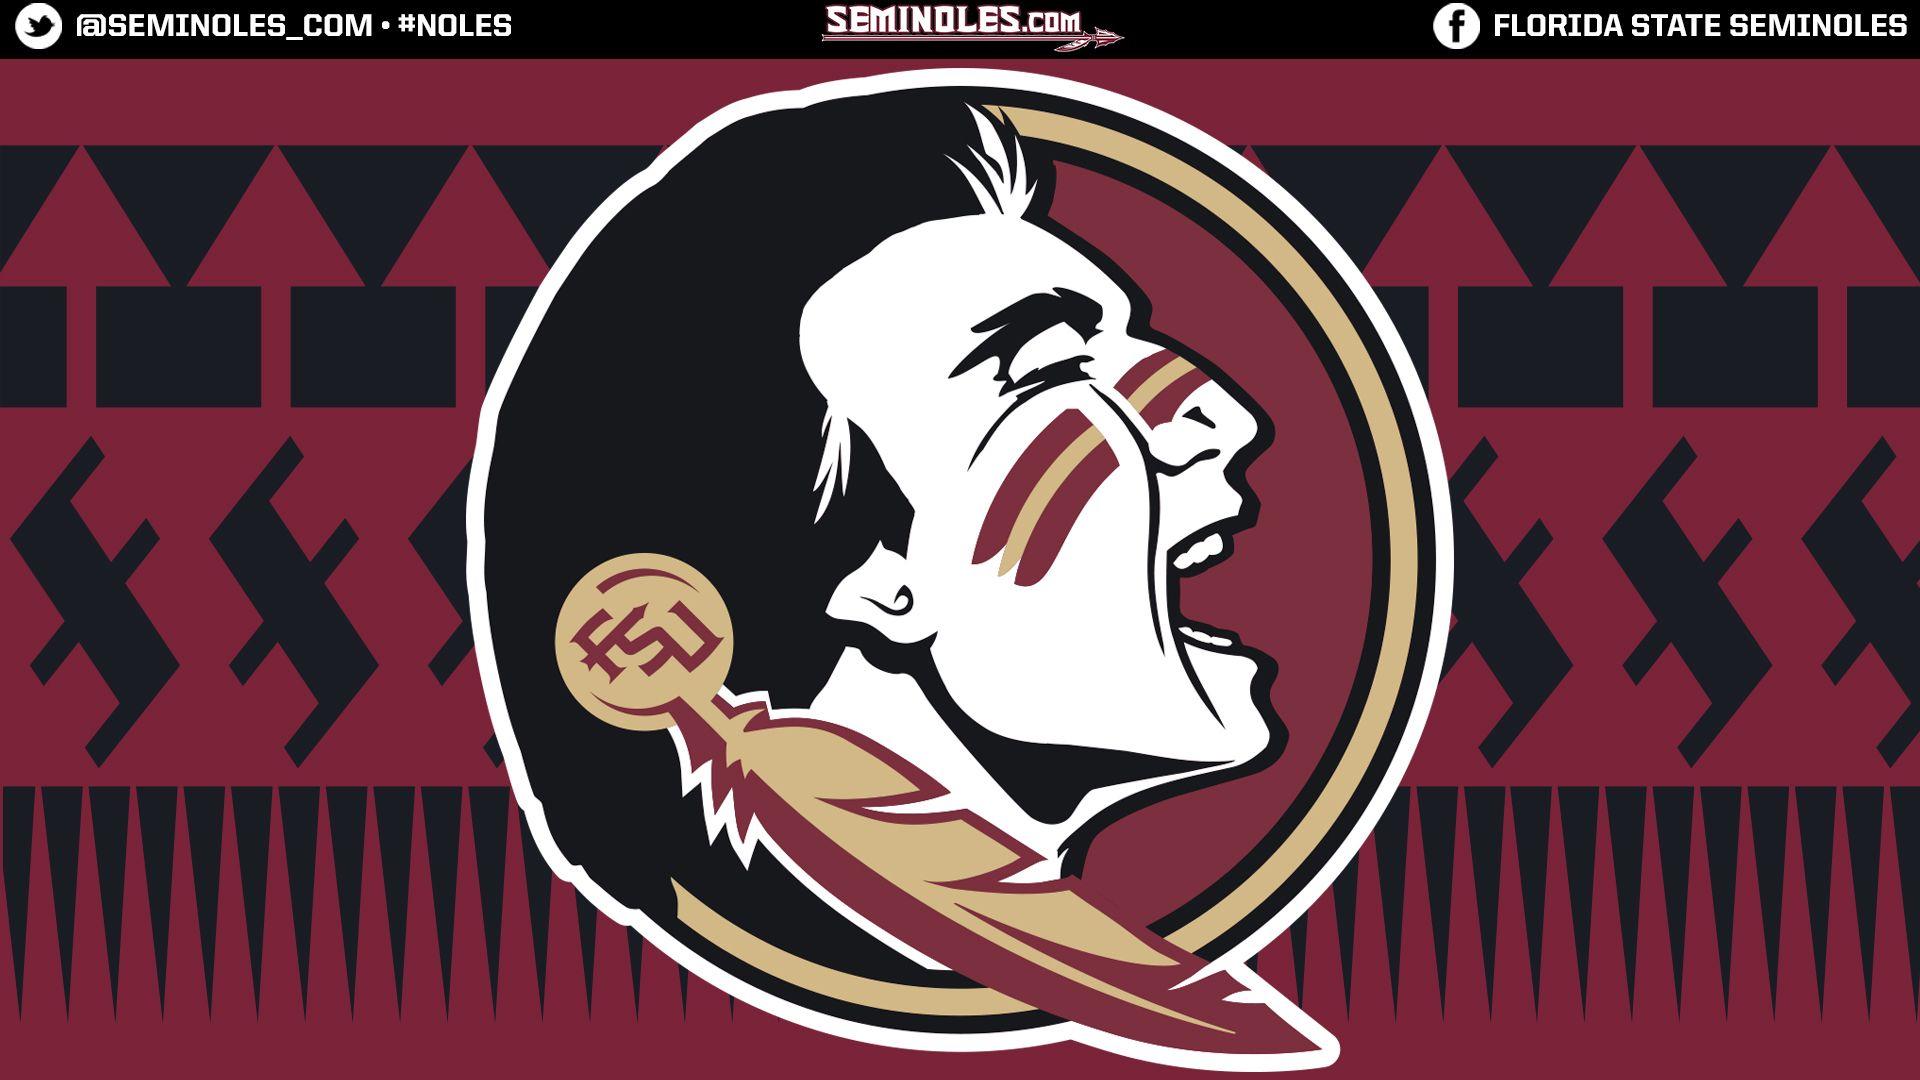 Florida State University Football Logo - Seminoles.com Desktop Wallpapers